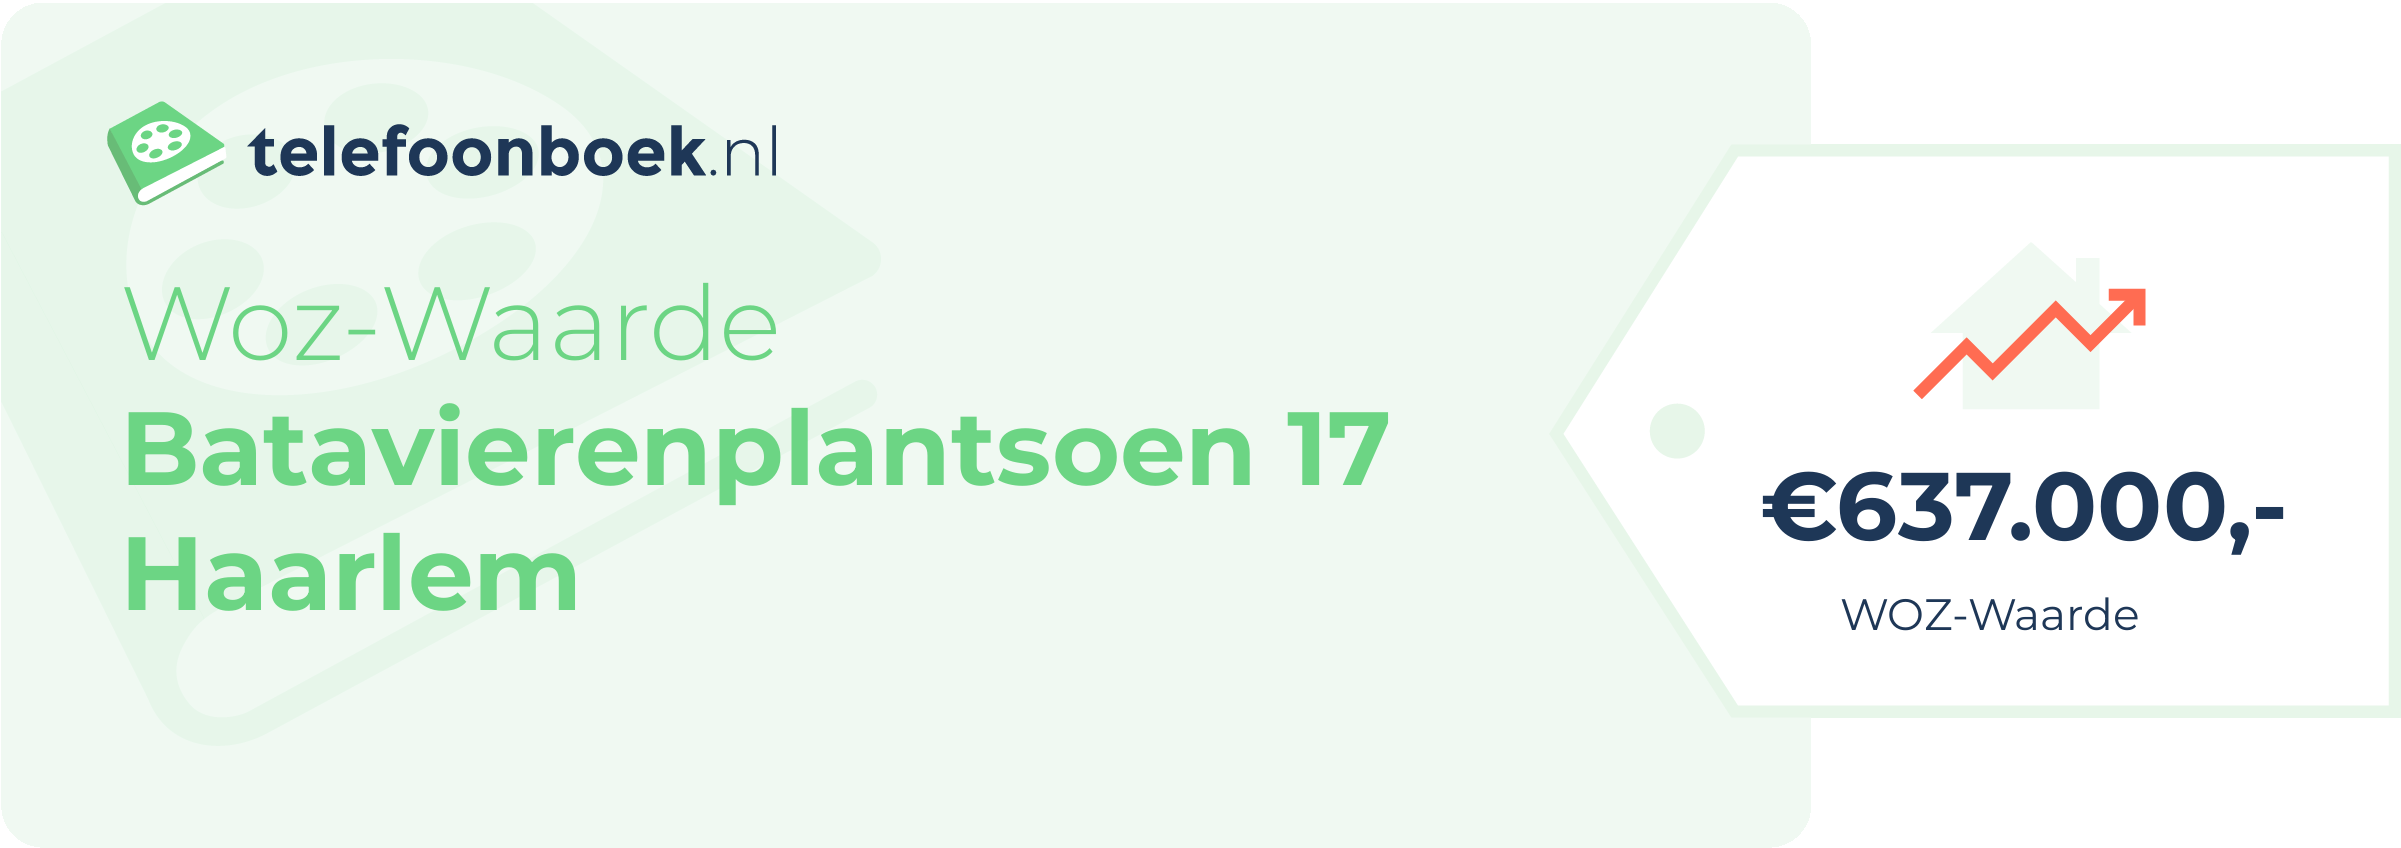 WOZ-waarde Batavierenplantsoen 17 Haarlem